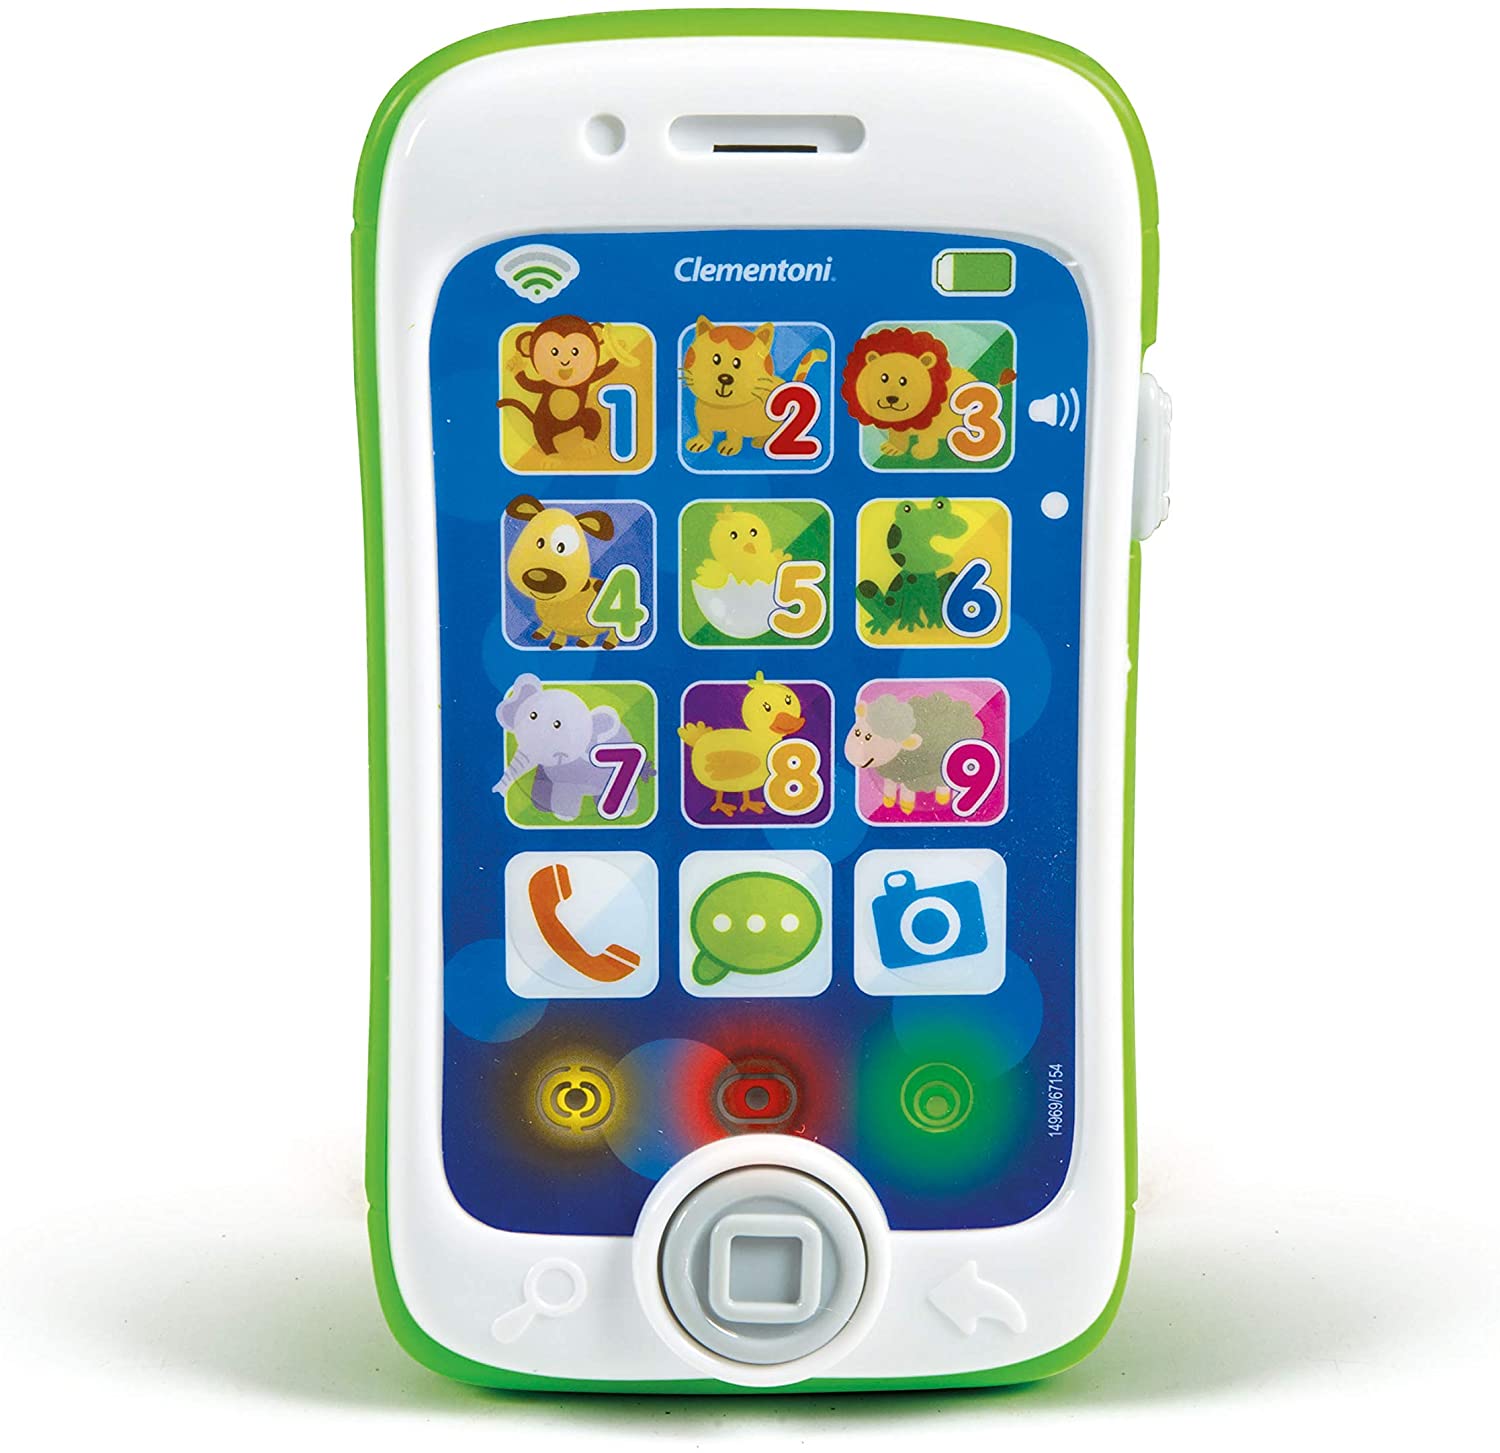 Clementoni 14969 - Giochi Elettronici, Smartphone Touch & Play